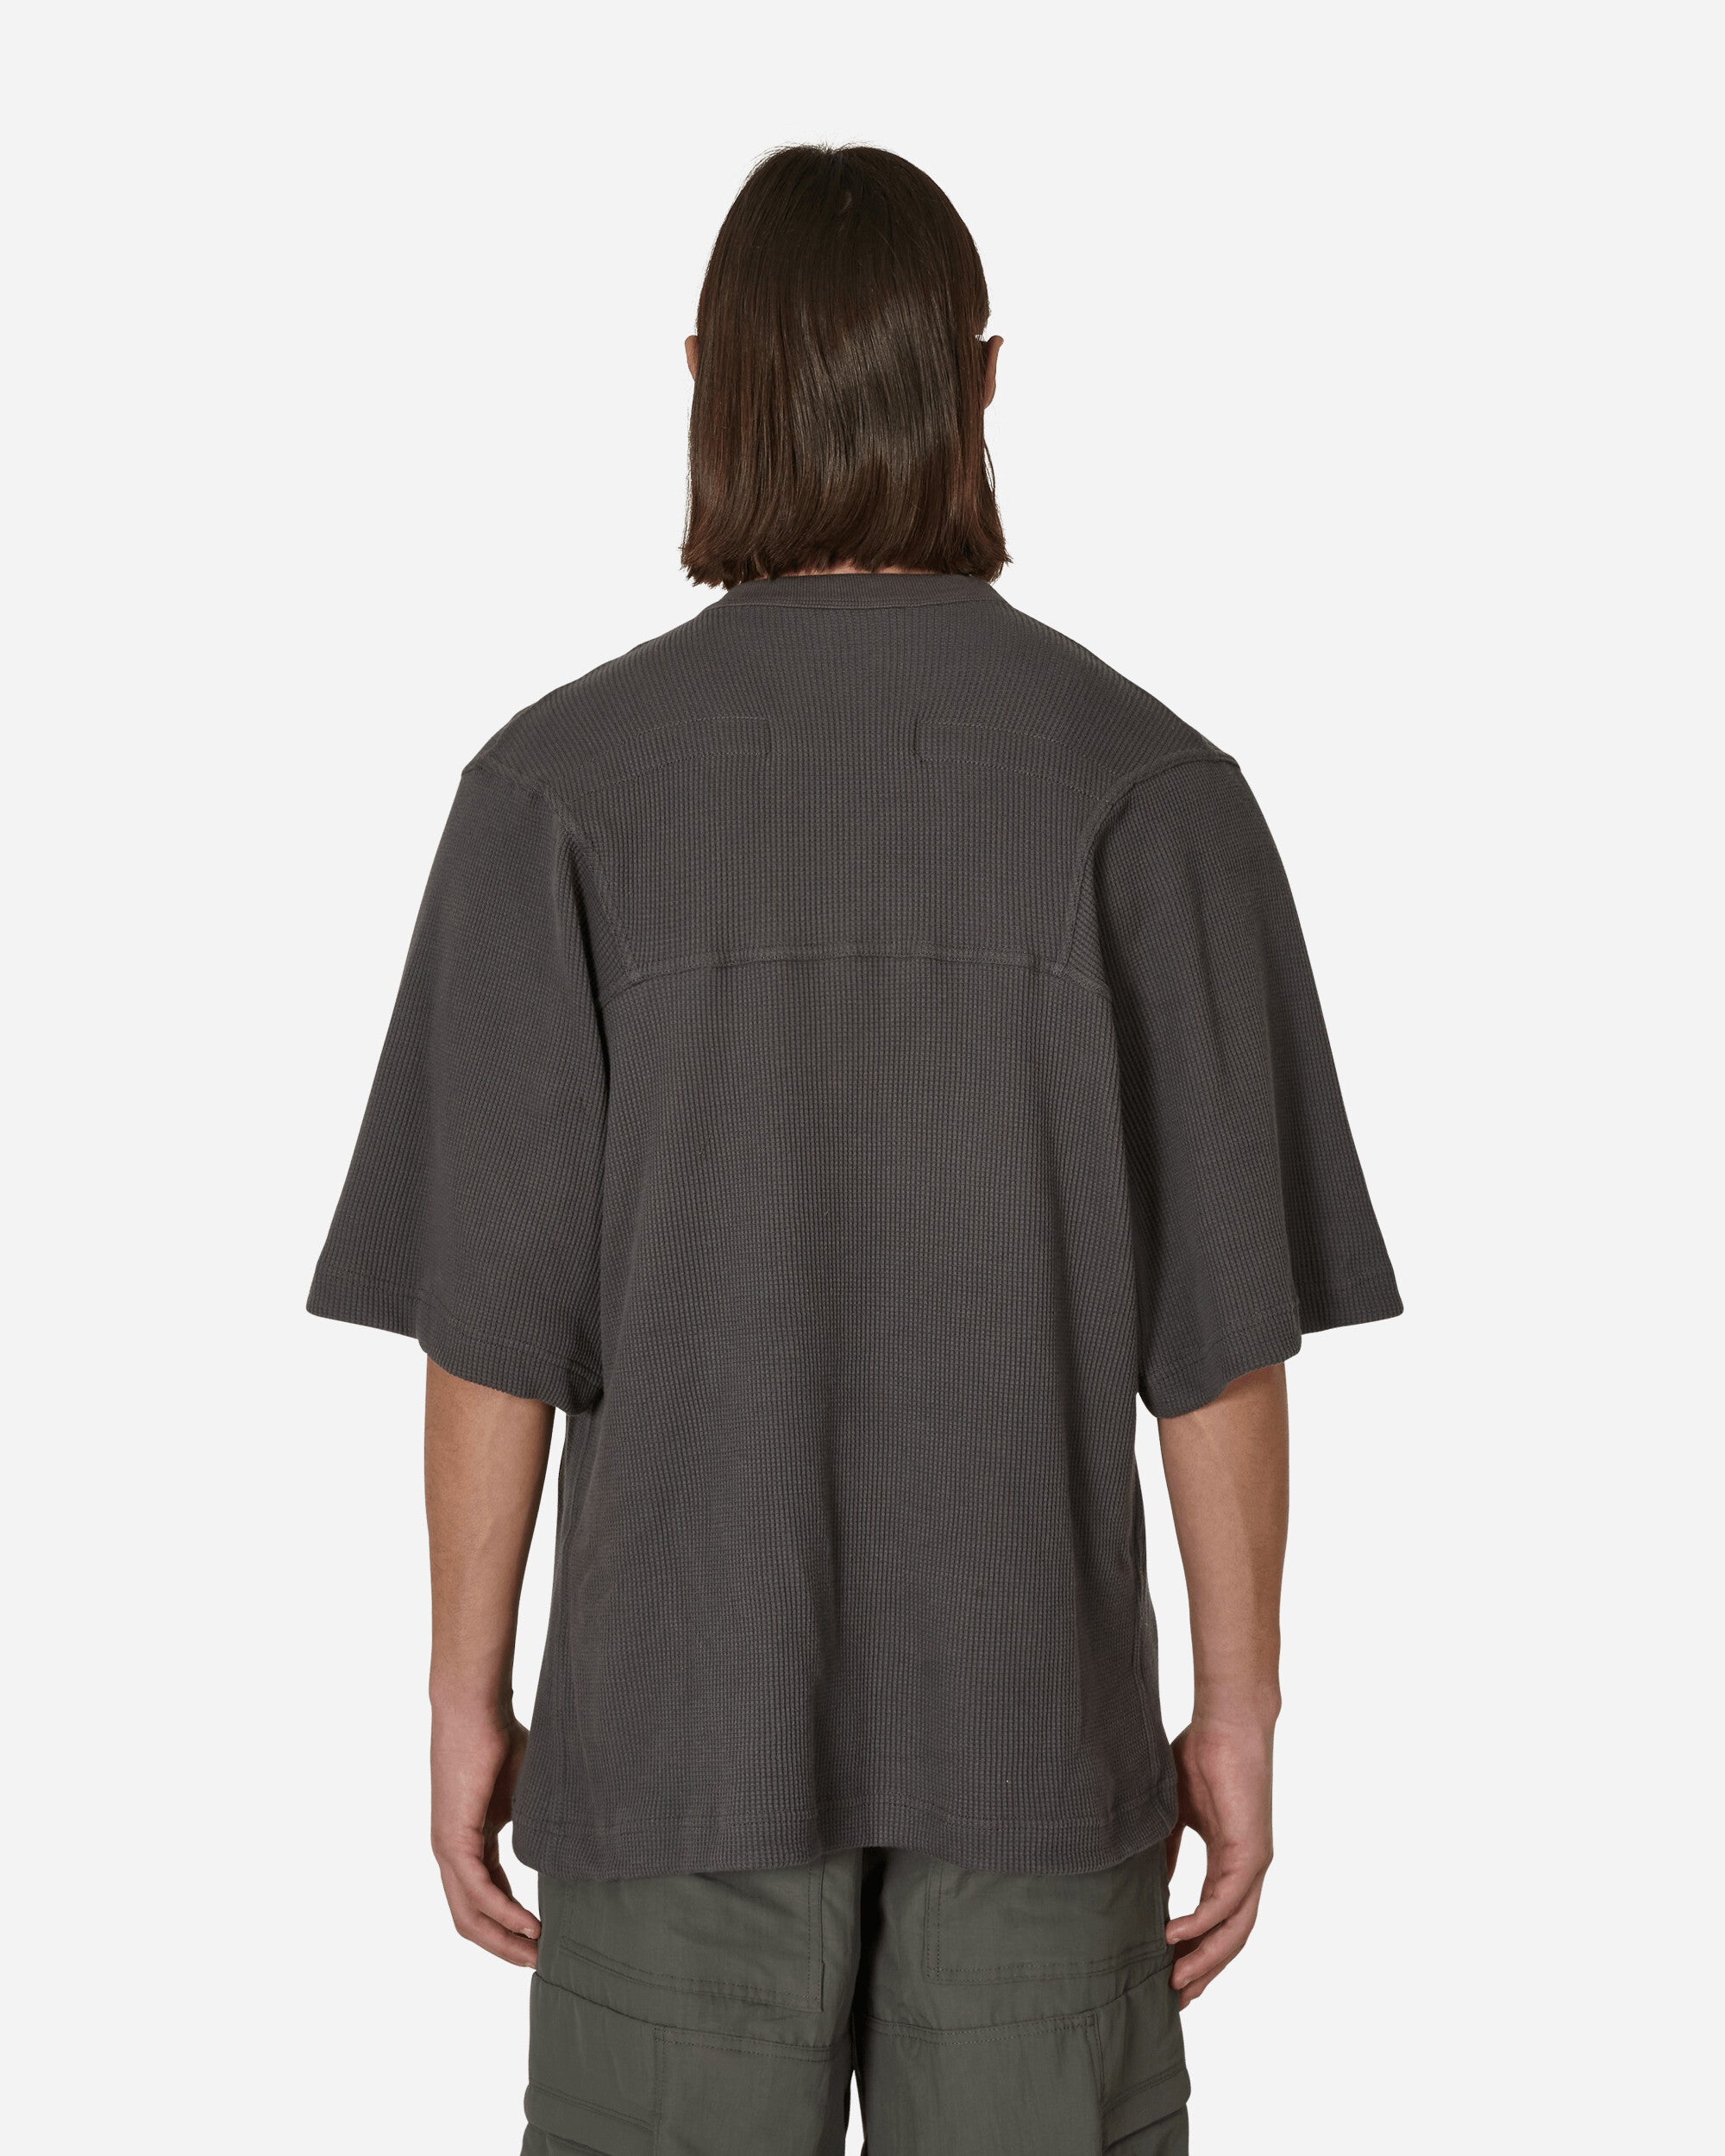 Bryan Jimenéz Thermal Tee Graphite T-Shirts Shortsleeve BJSS23S-2 1